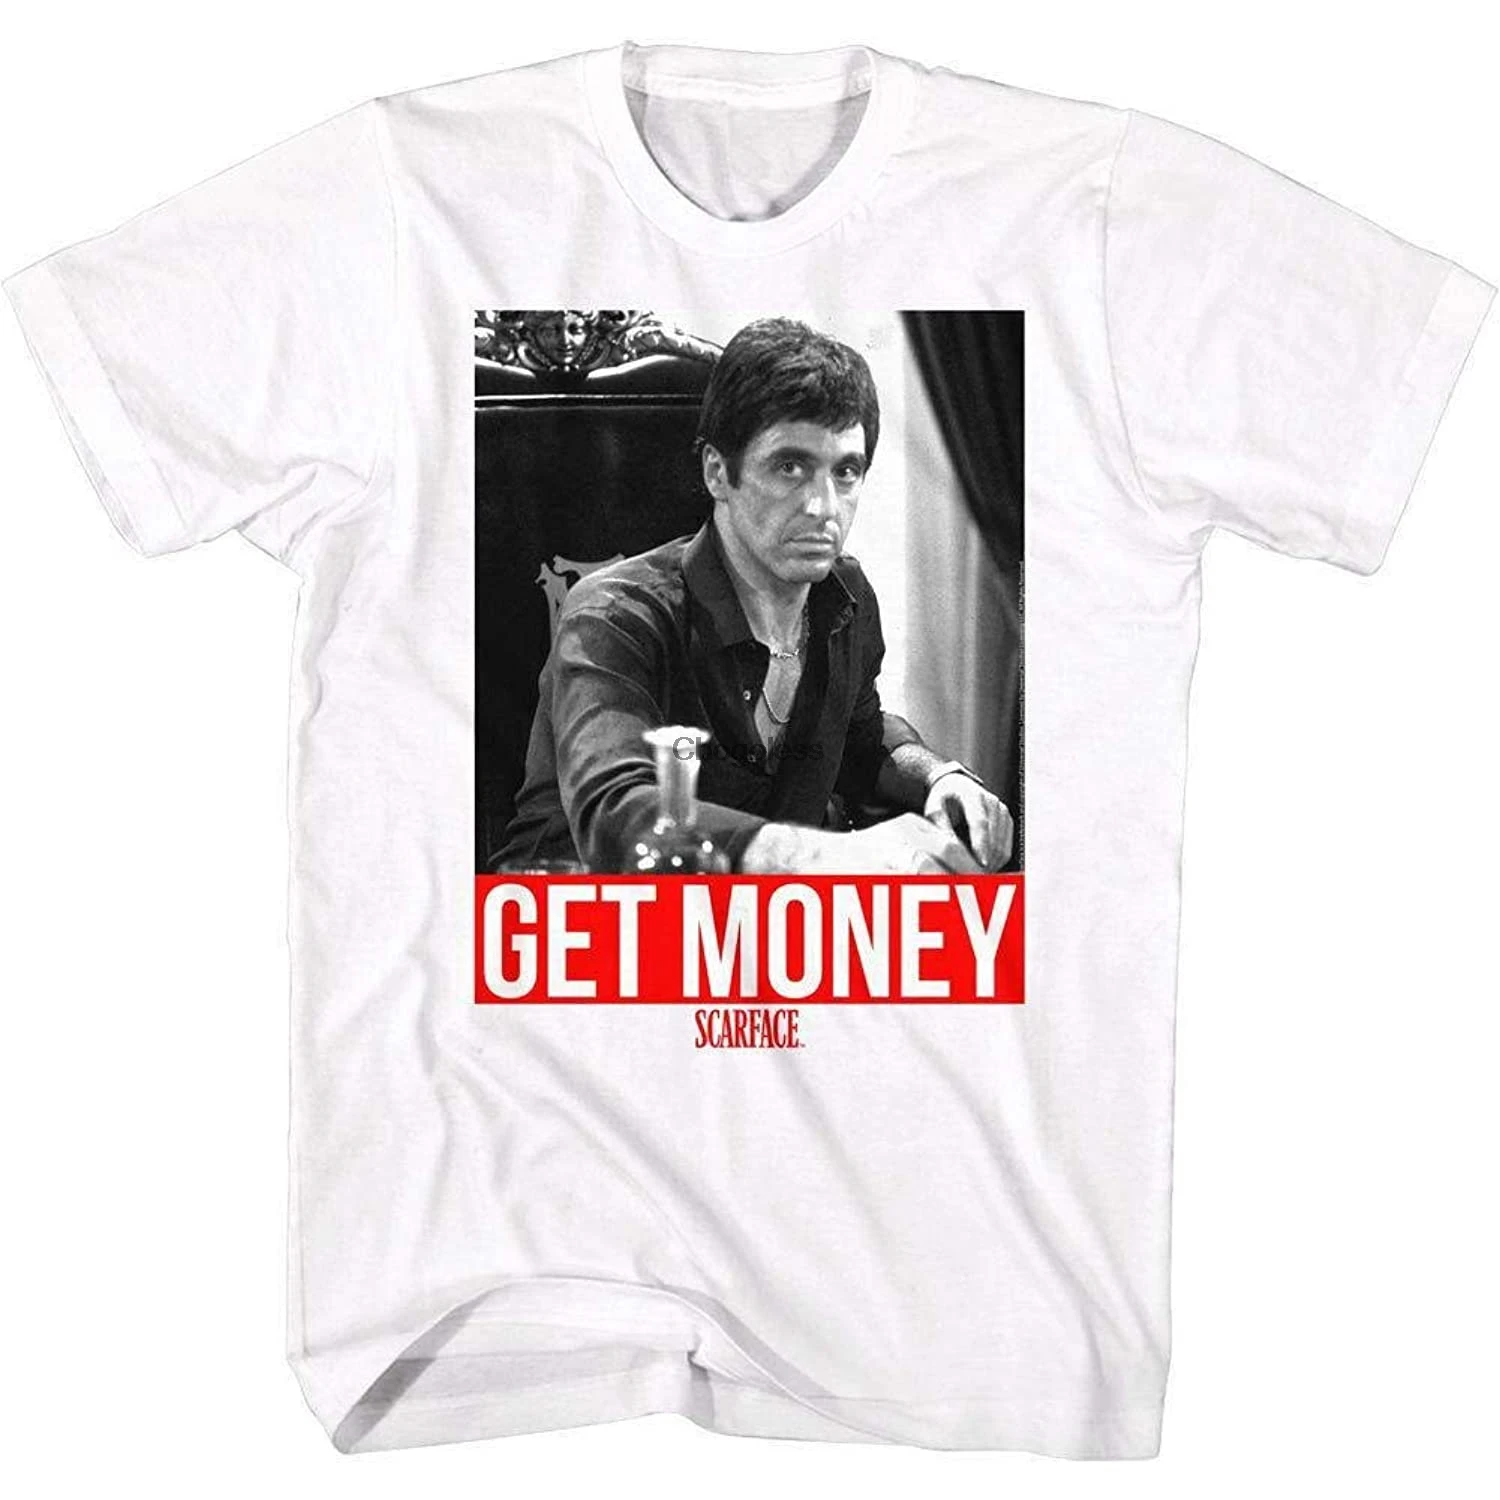 

GARNETT Scarface Al Pacino Get Money Mens T Shirt Tony Montana Mafia GangSter Movie Women Men Unisex Shirt Short Sleev